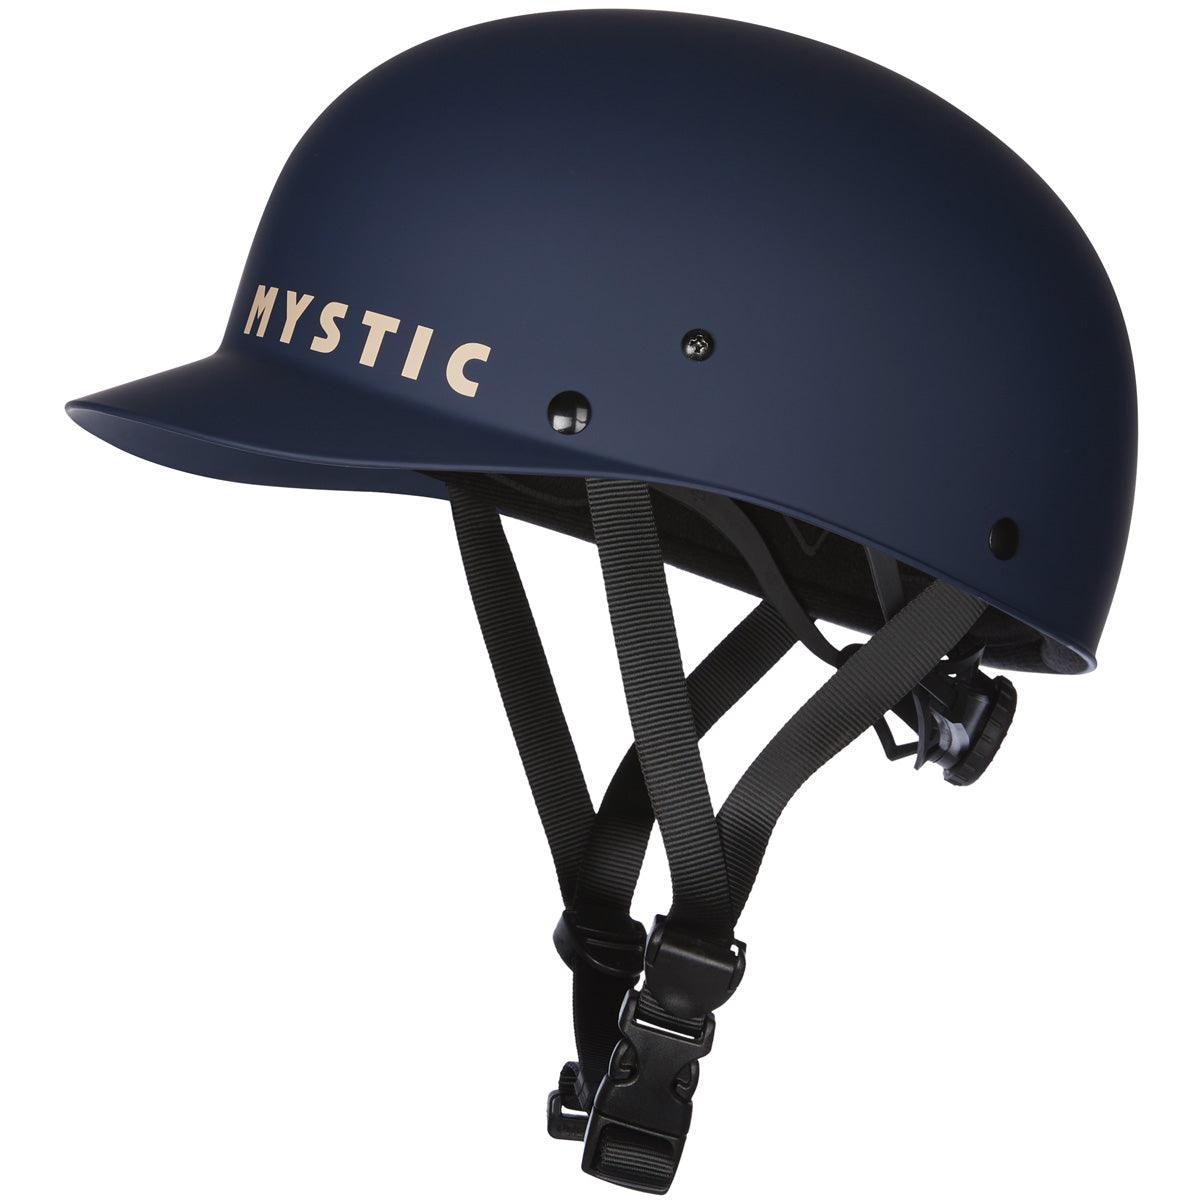 Mystic Shiznit Helmet - Kiteshop.com